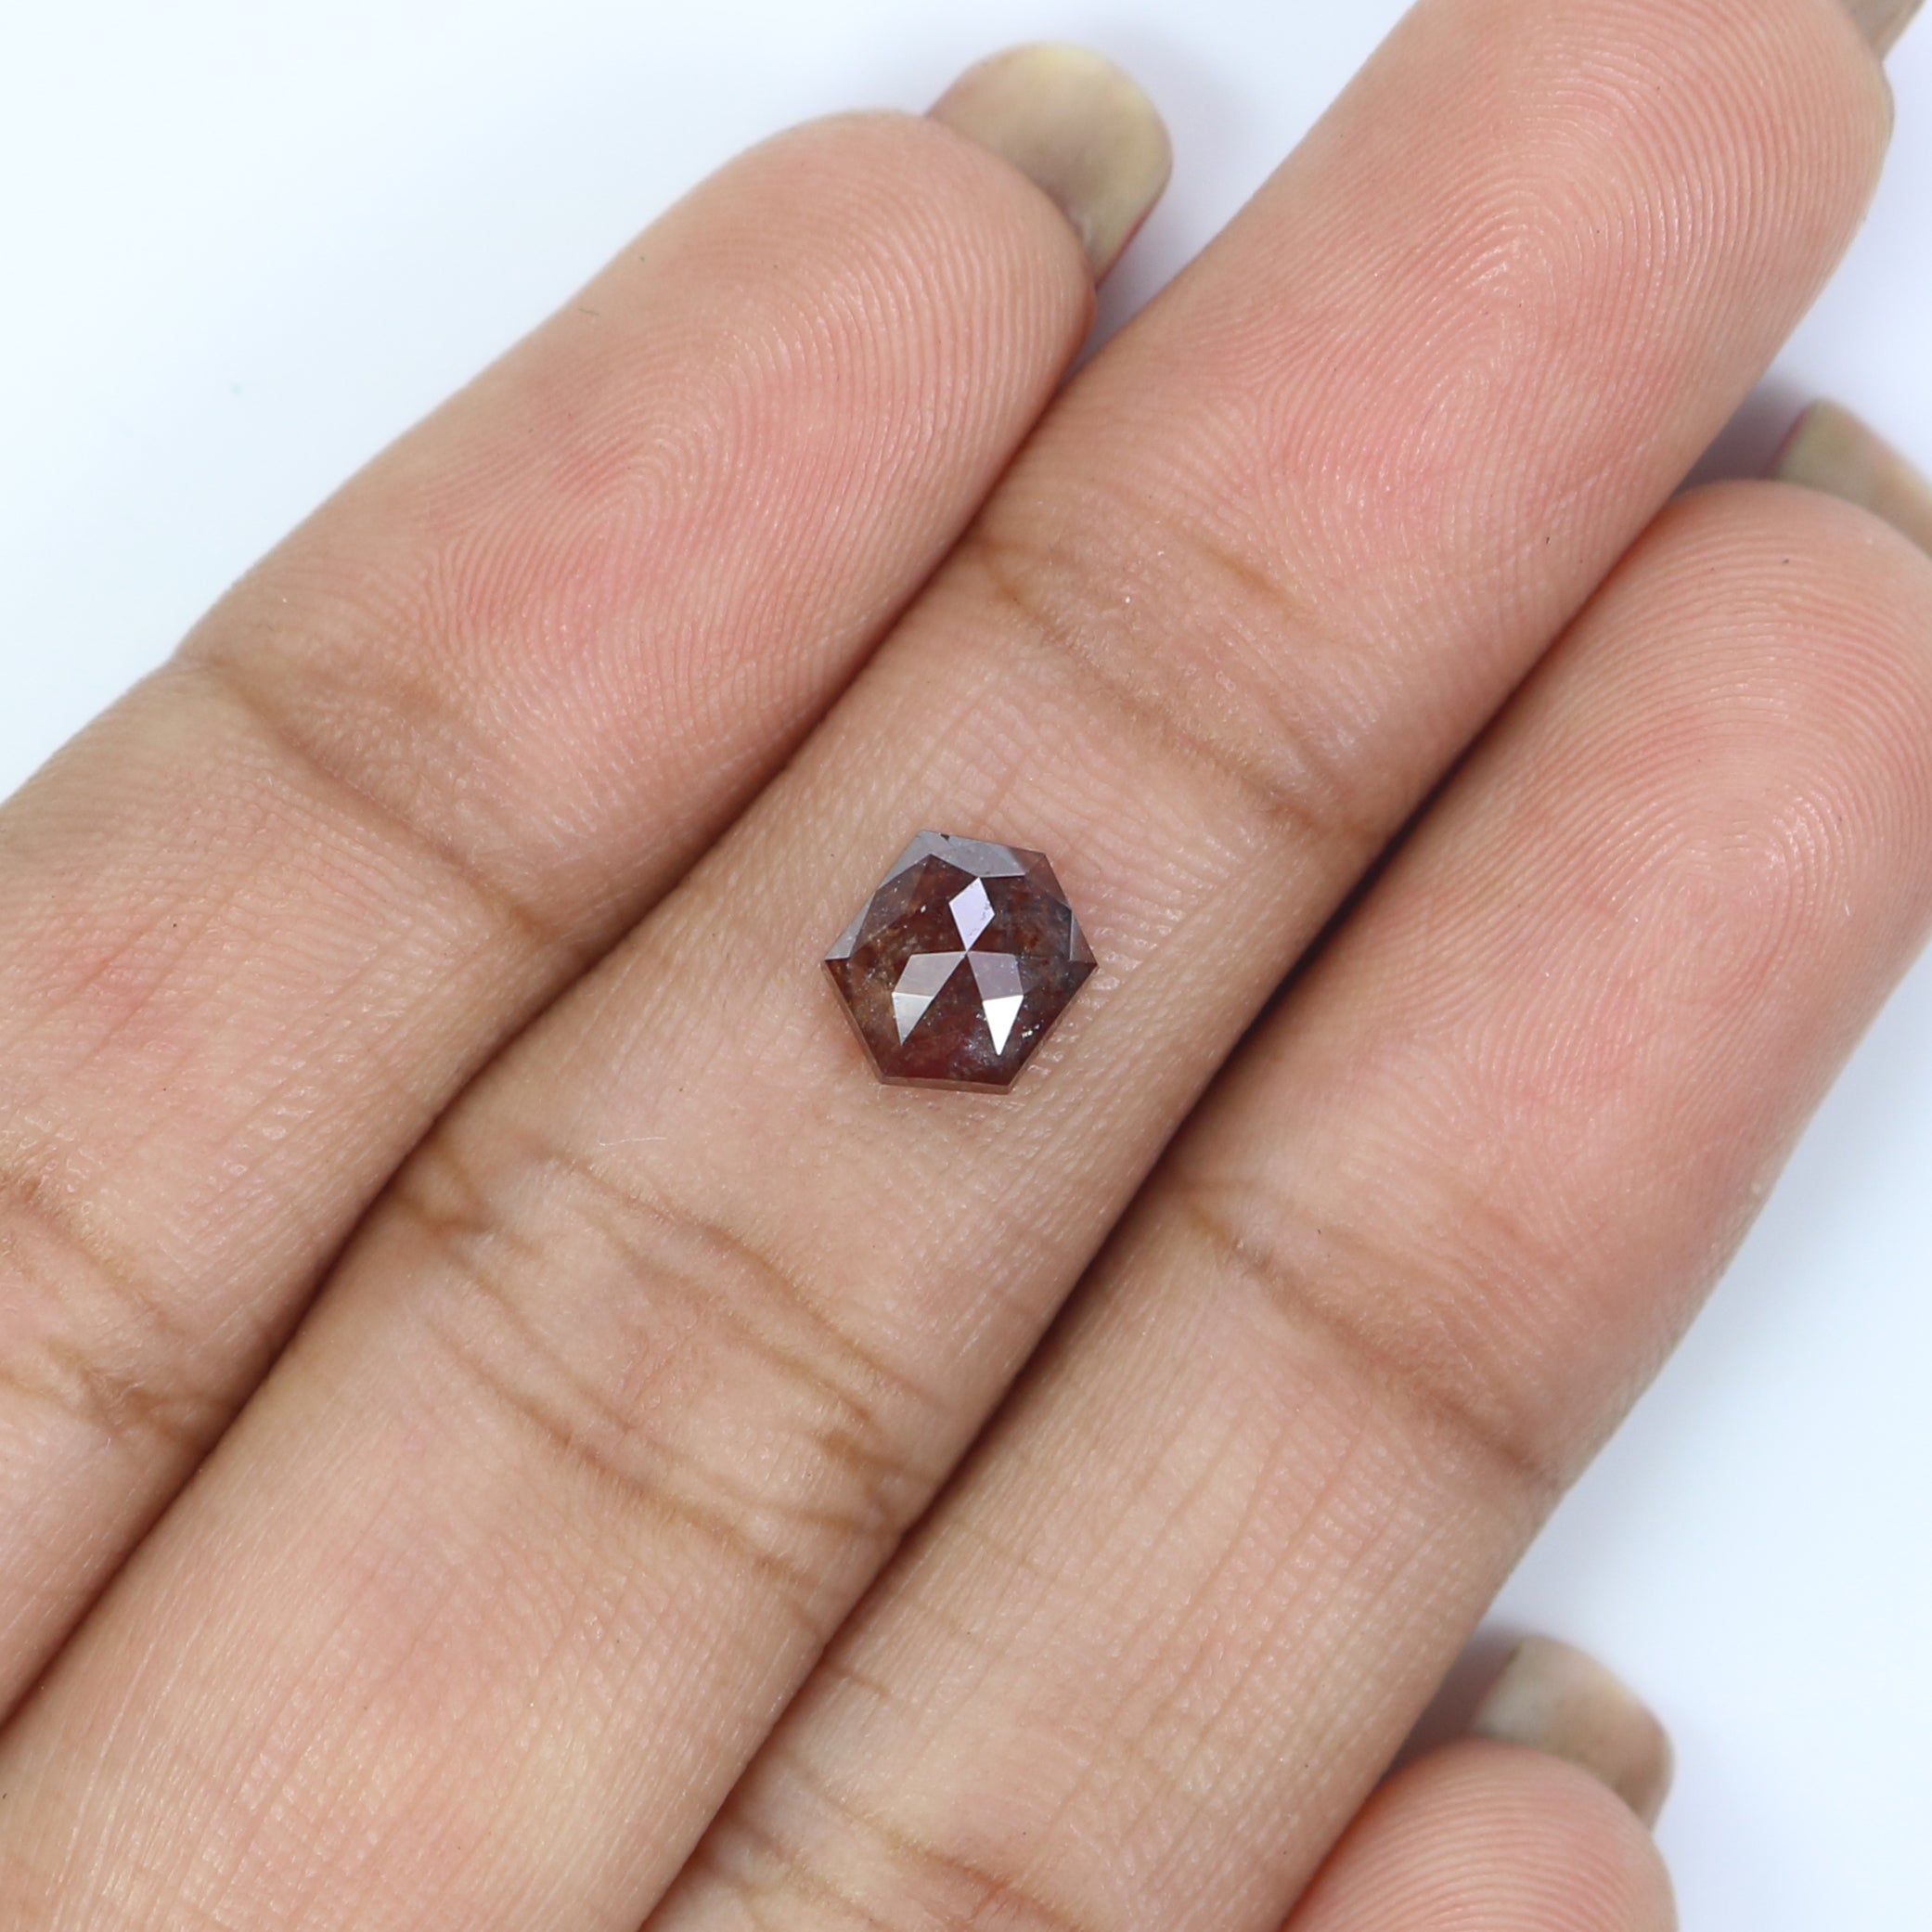 Natural Loose Hexagon Diamond, Brown Color Diamond, Natural Loose Diamond, Hexagon Rose Cut Diamond, 0.96 CT Hexagon Shape Diamond KDL2850